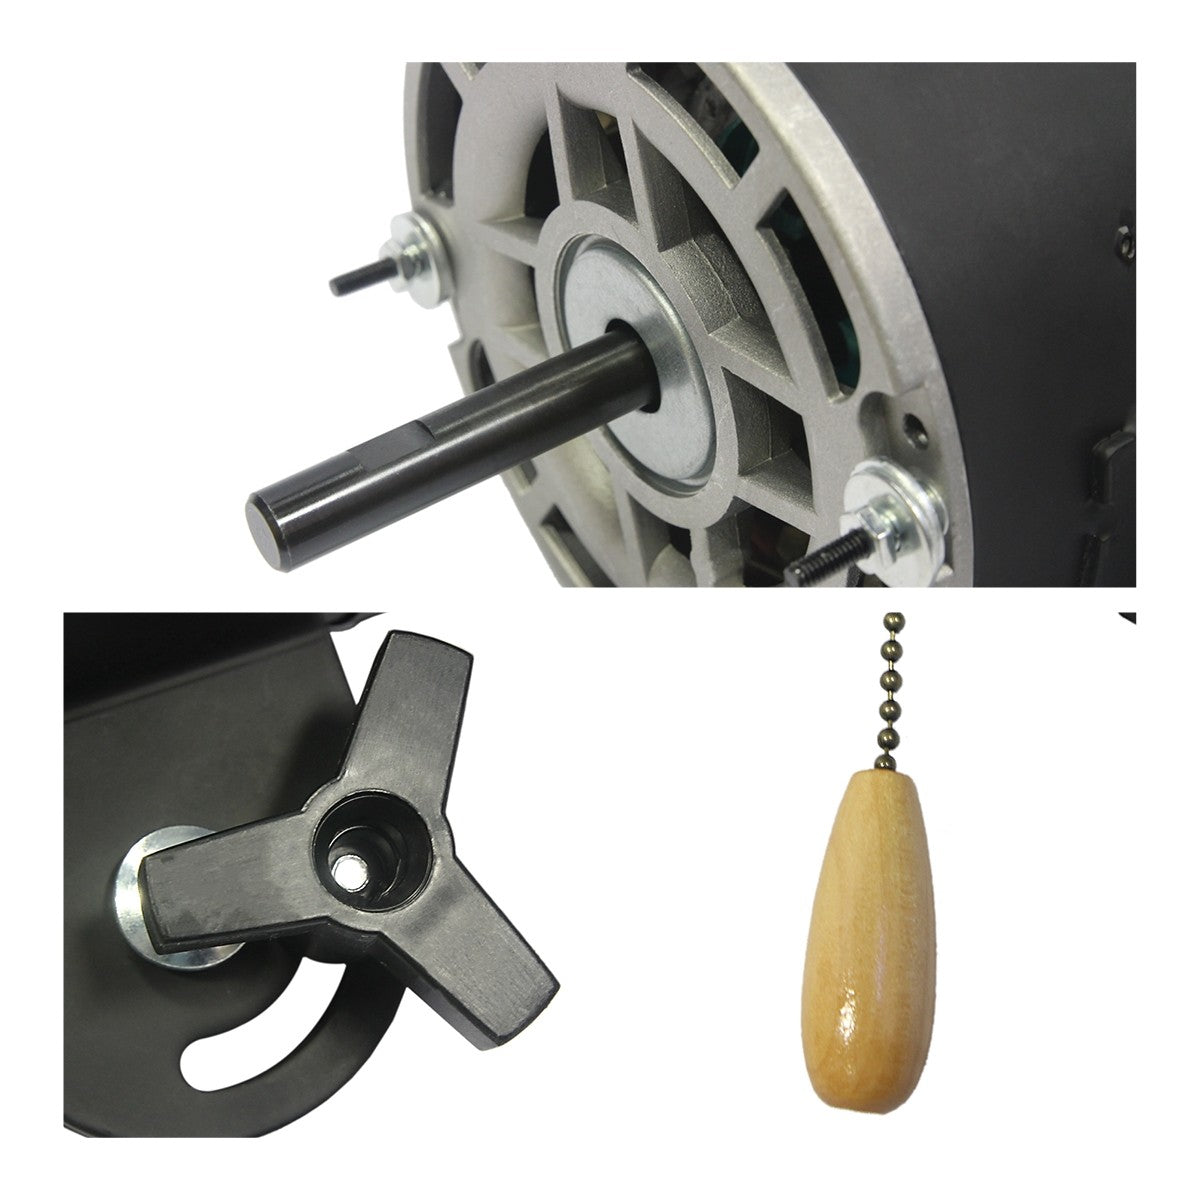 Detailed close-up of motor shaft, tilt adjustment knob, and pull chain.